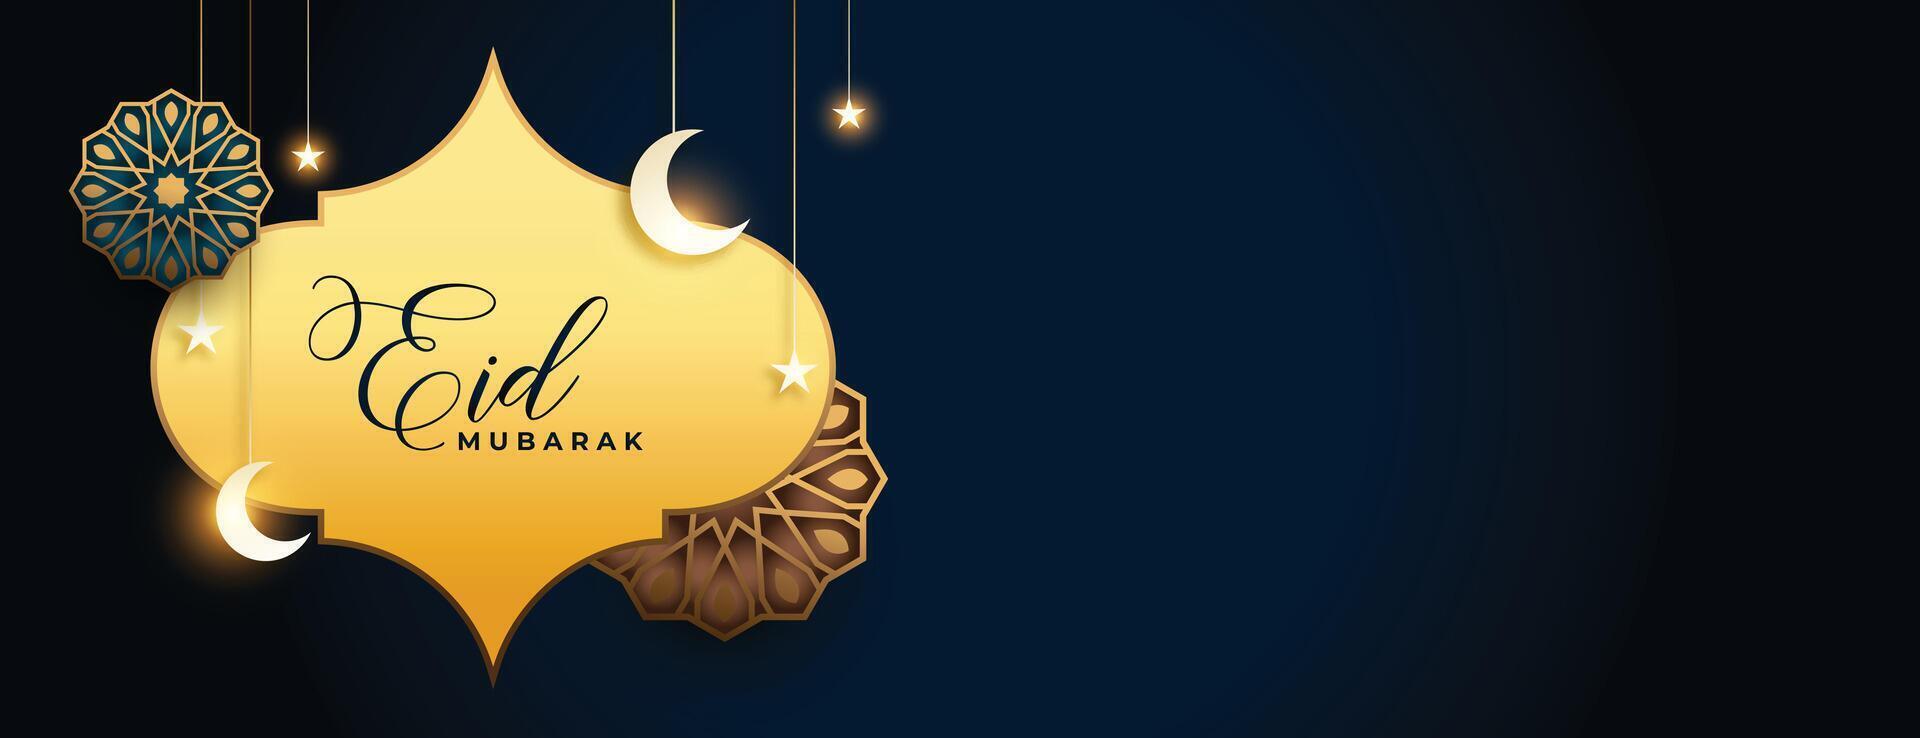 golden eid mubarak beautiful banner design vector